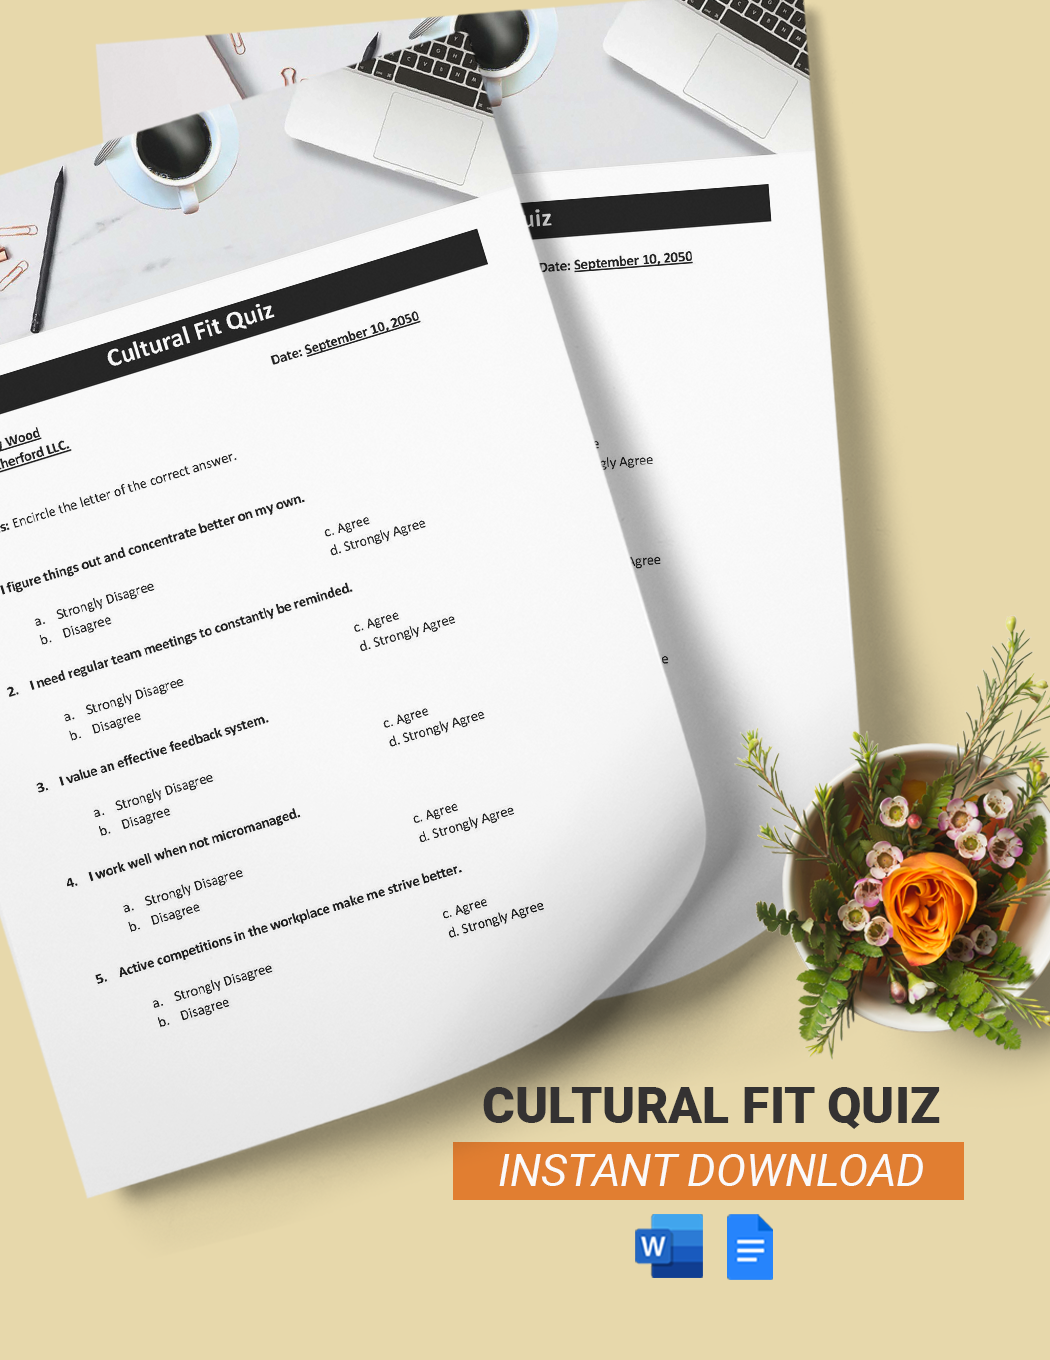 Cultural Fit Quiz Template in Word, Google Docs